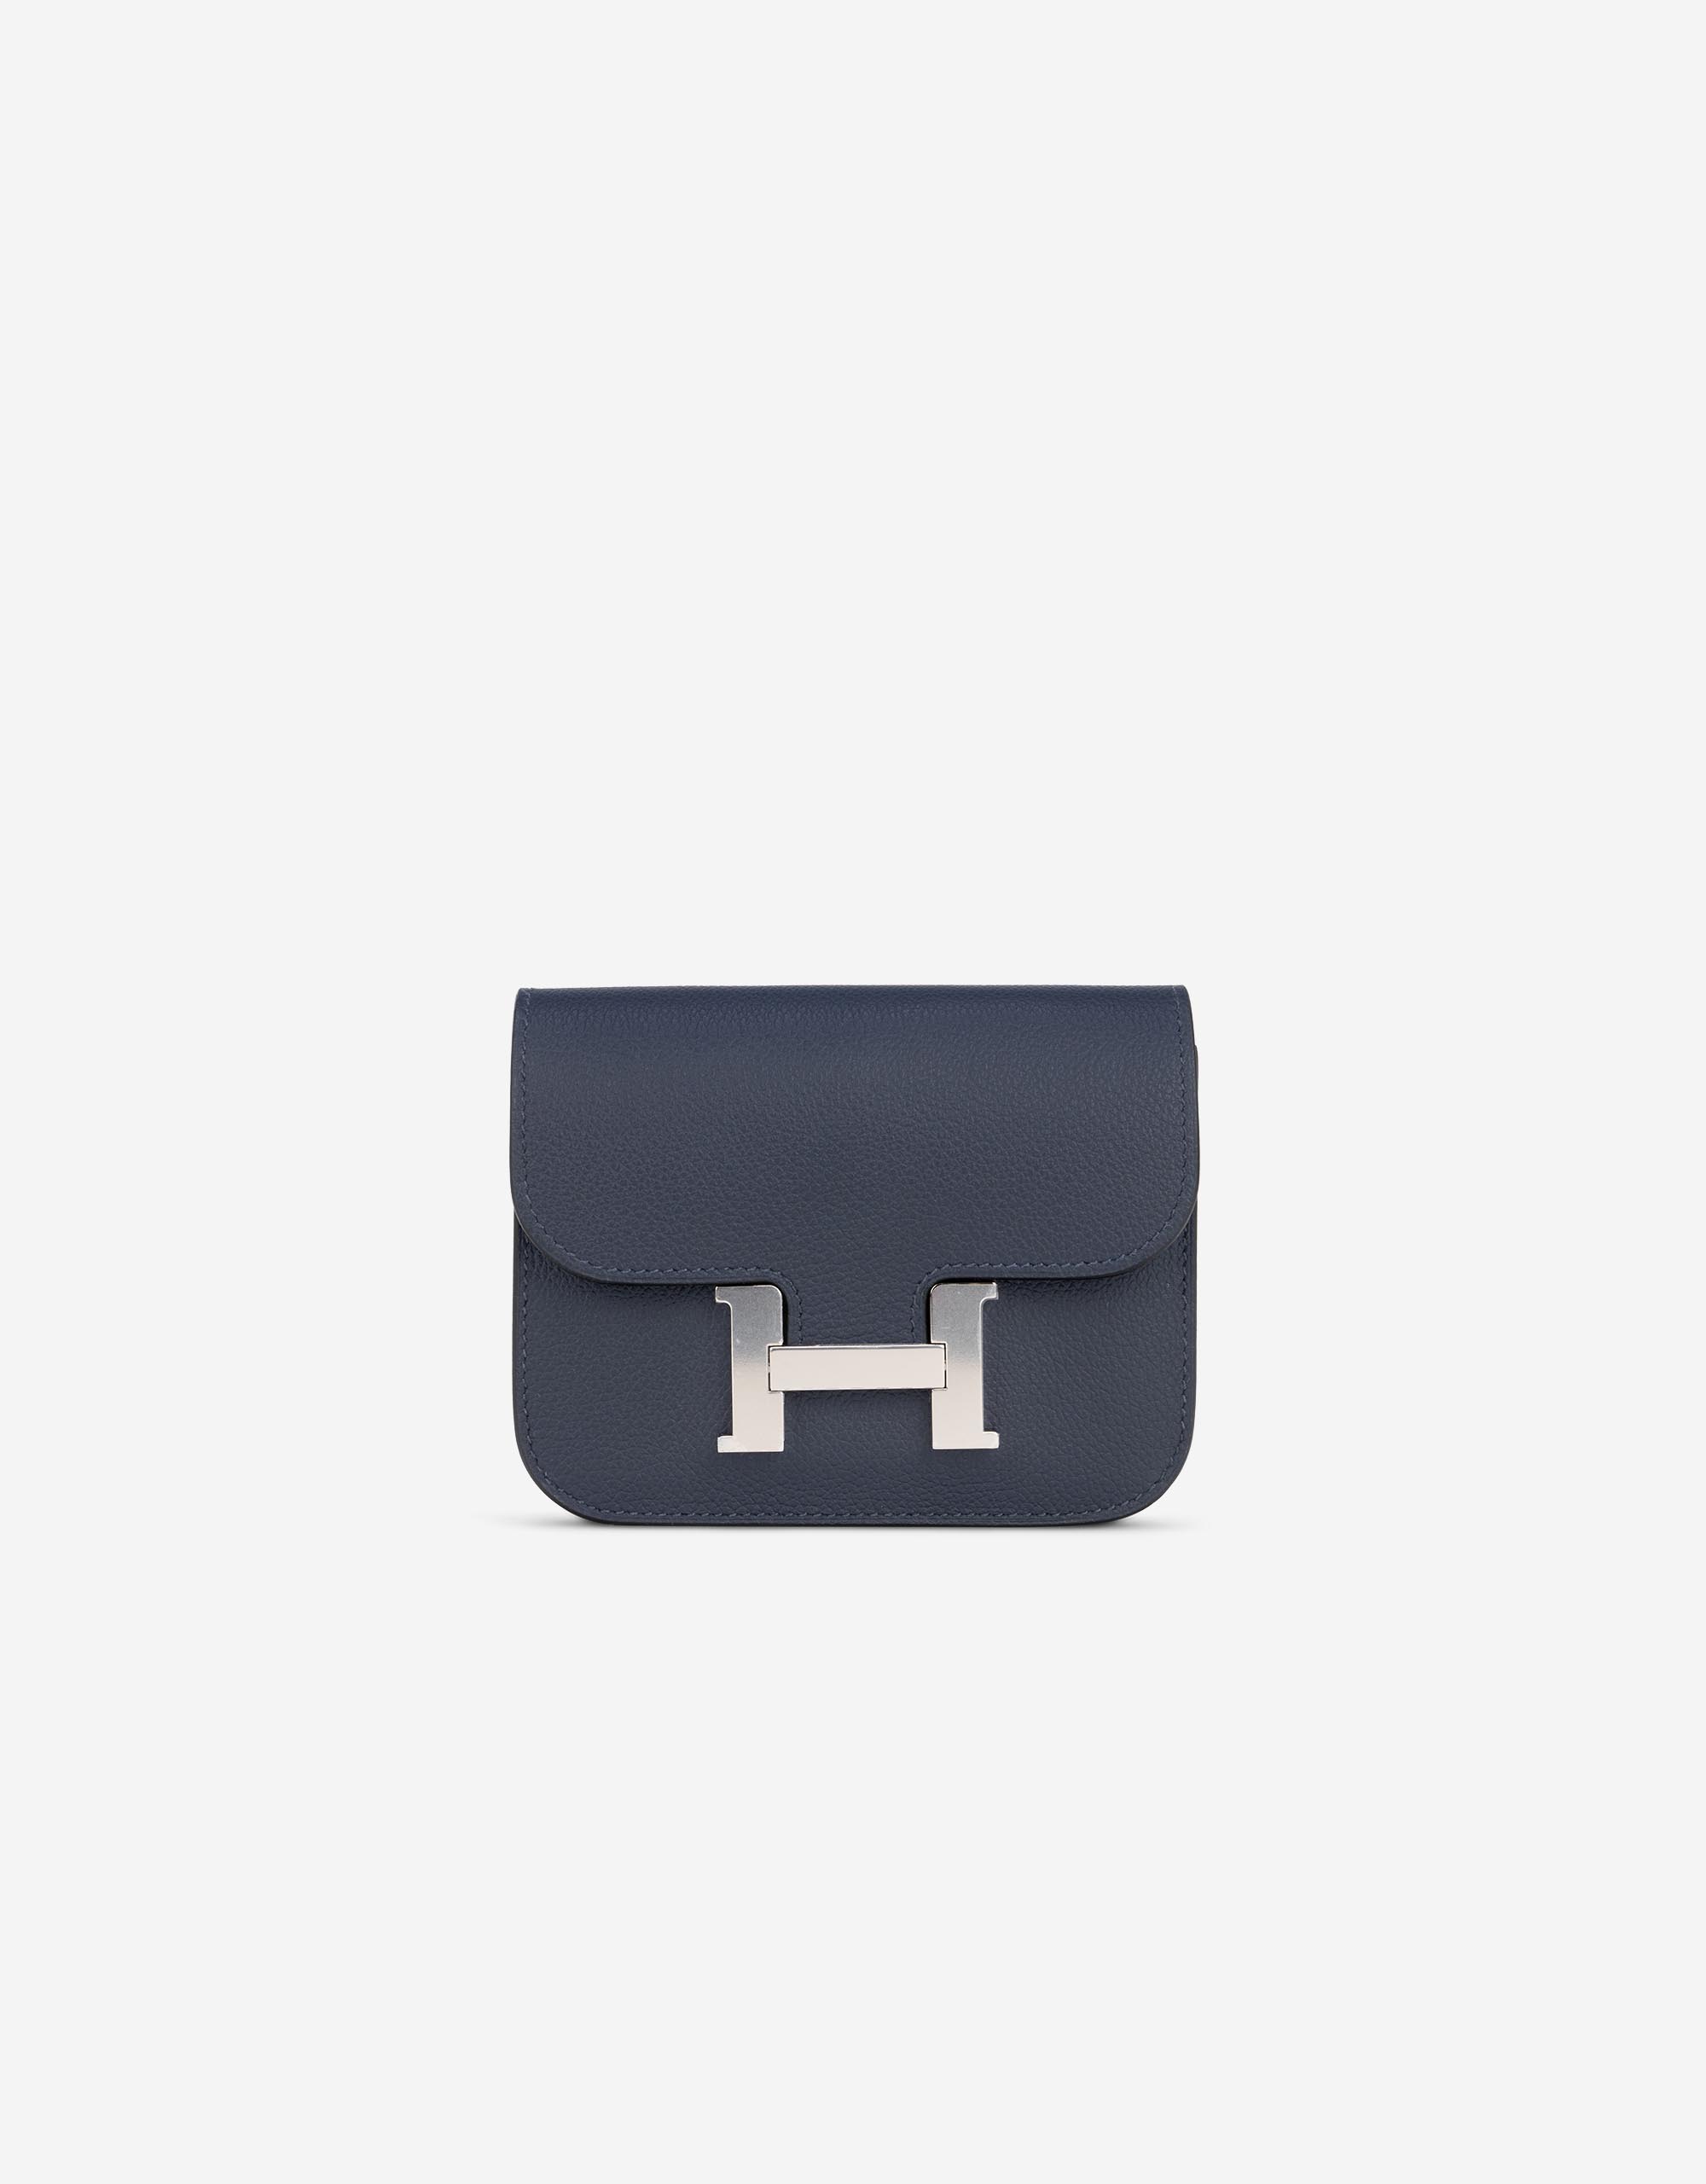 hermès bags brands